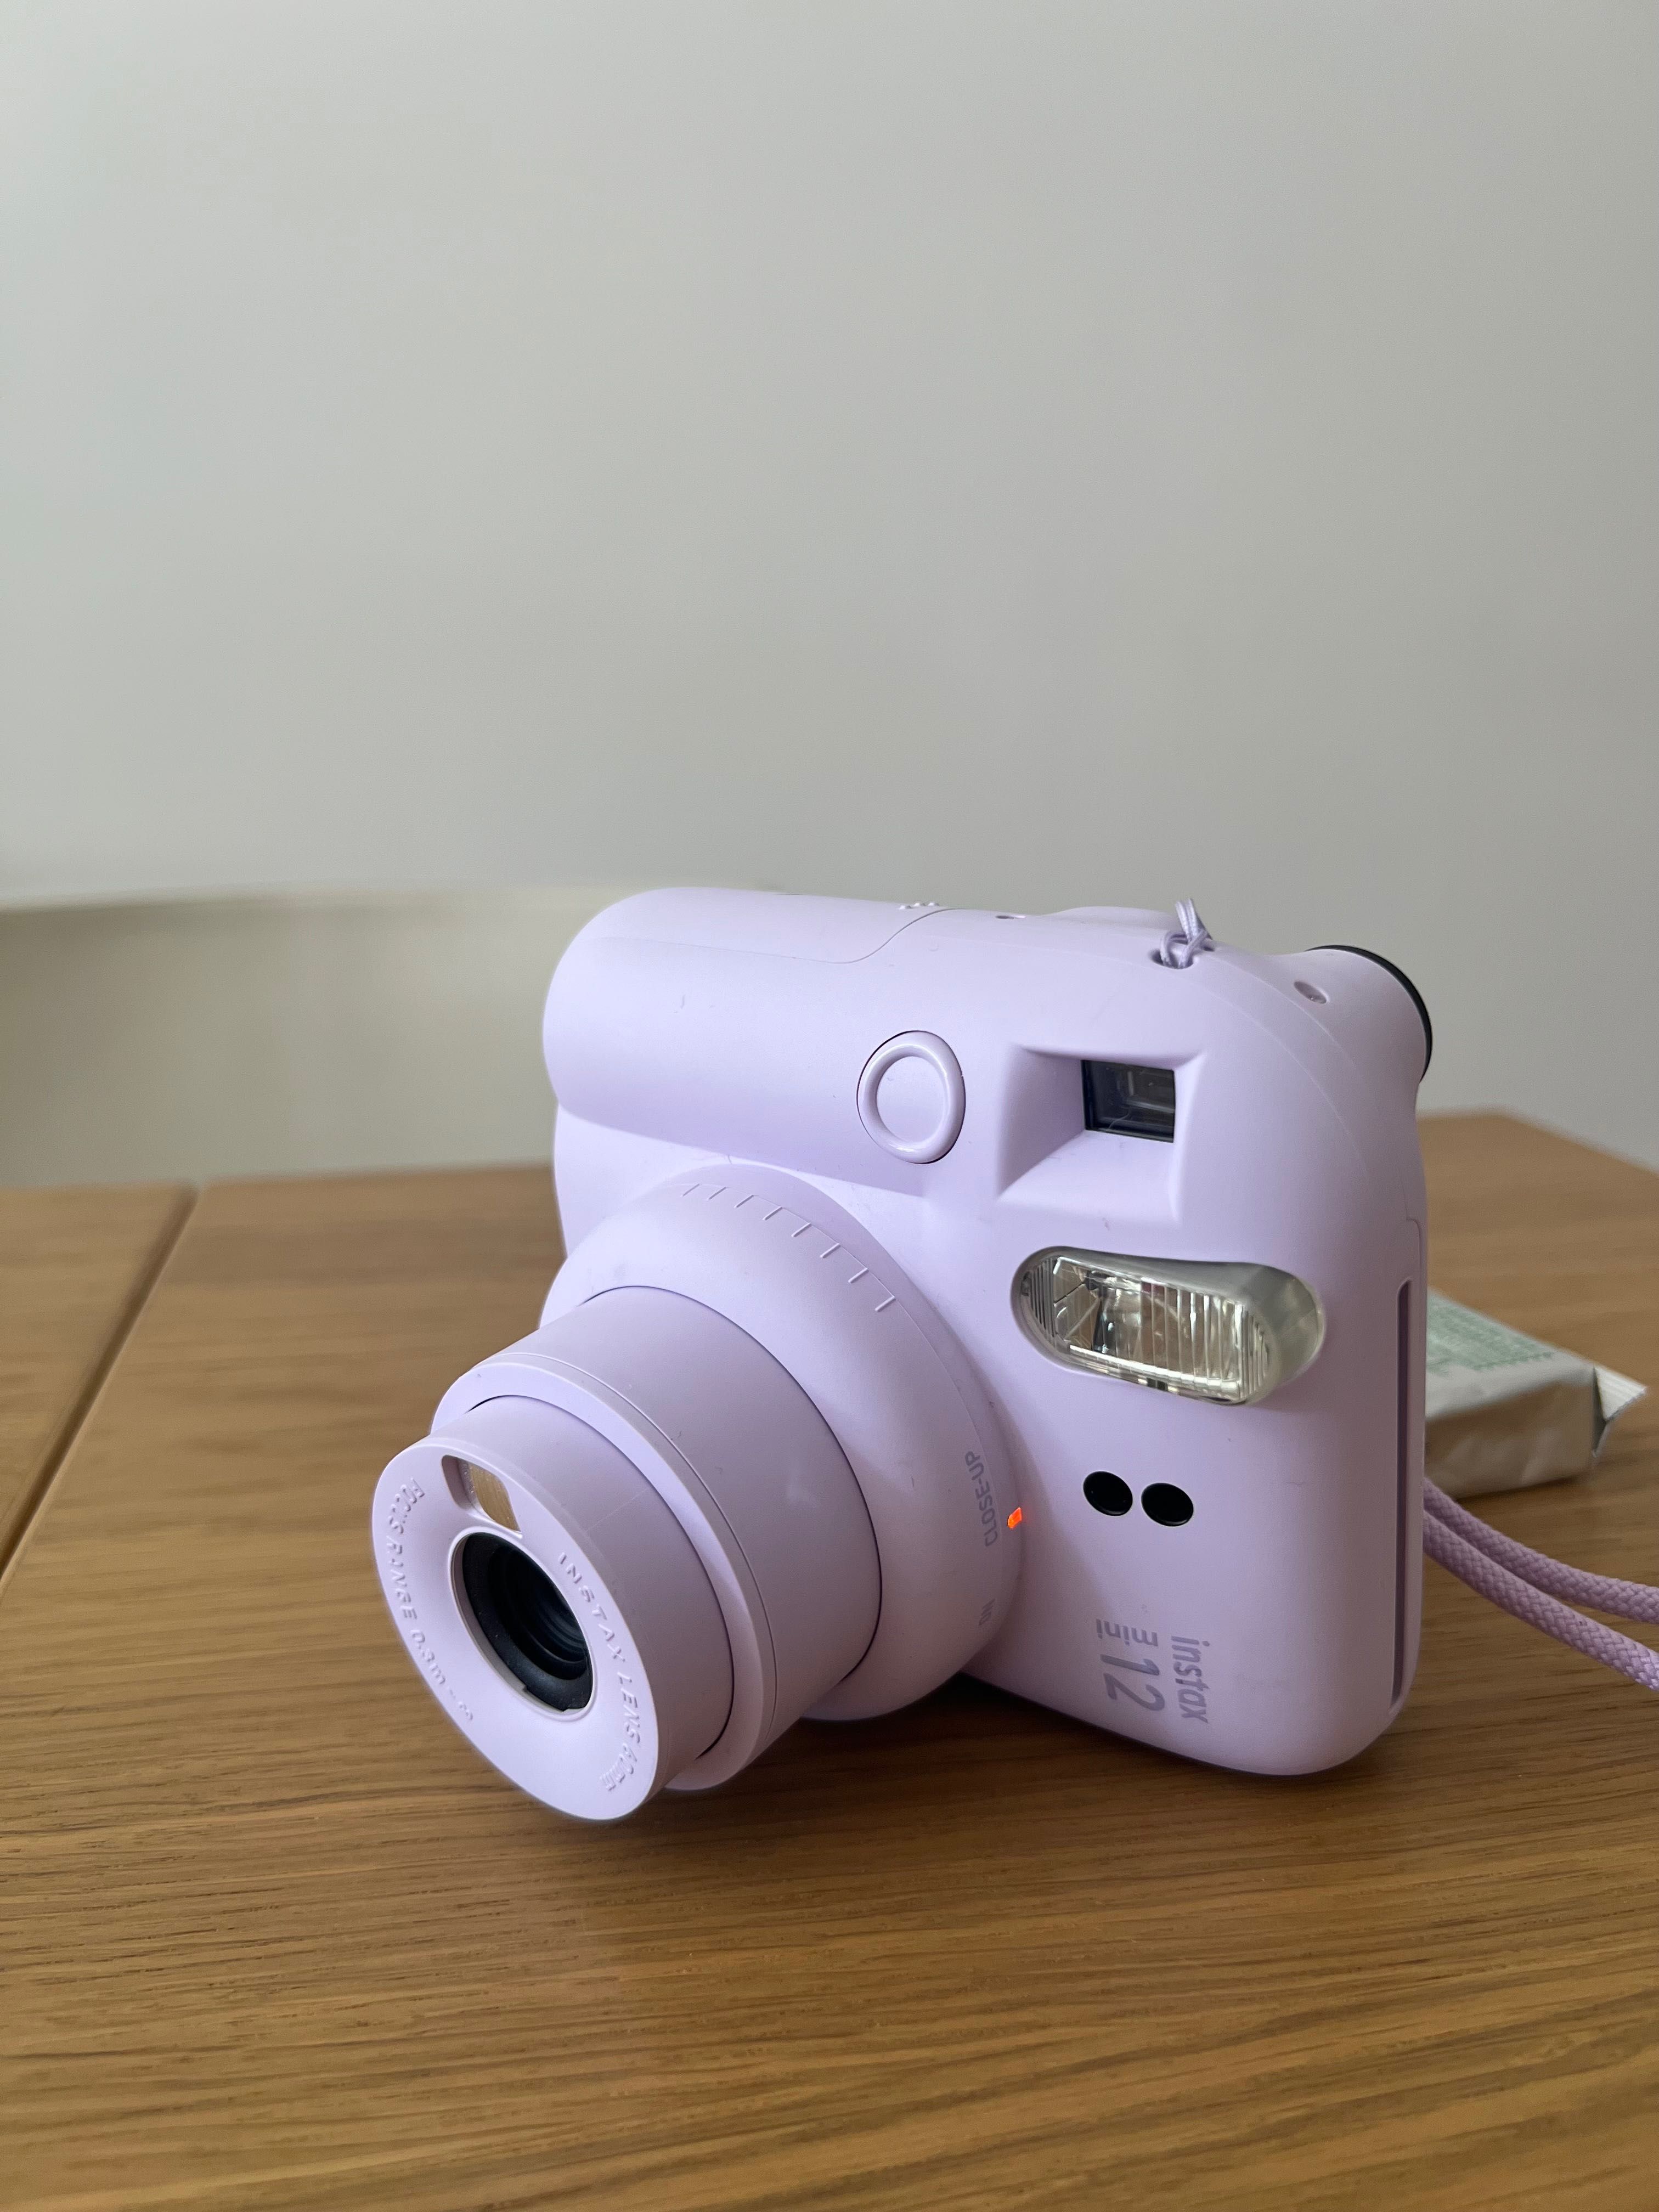 камера Instax 12 mini